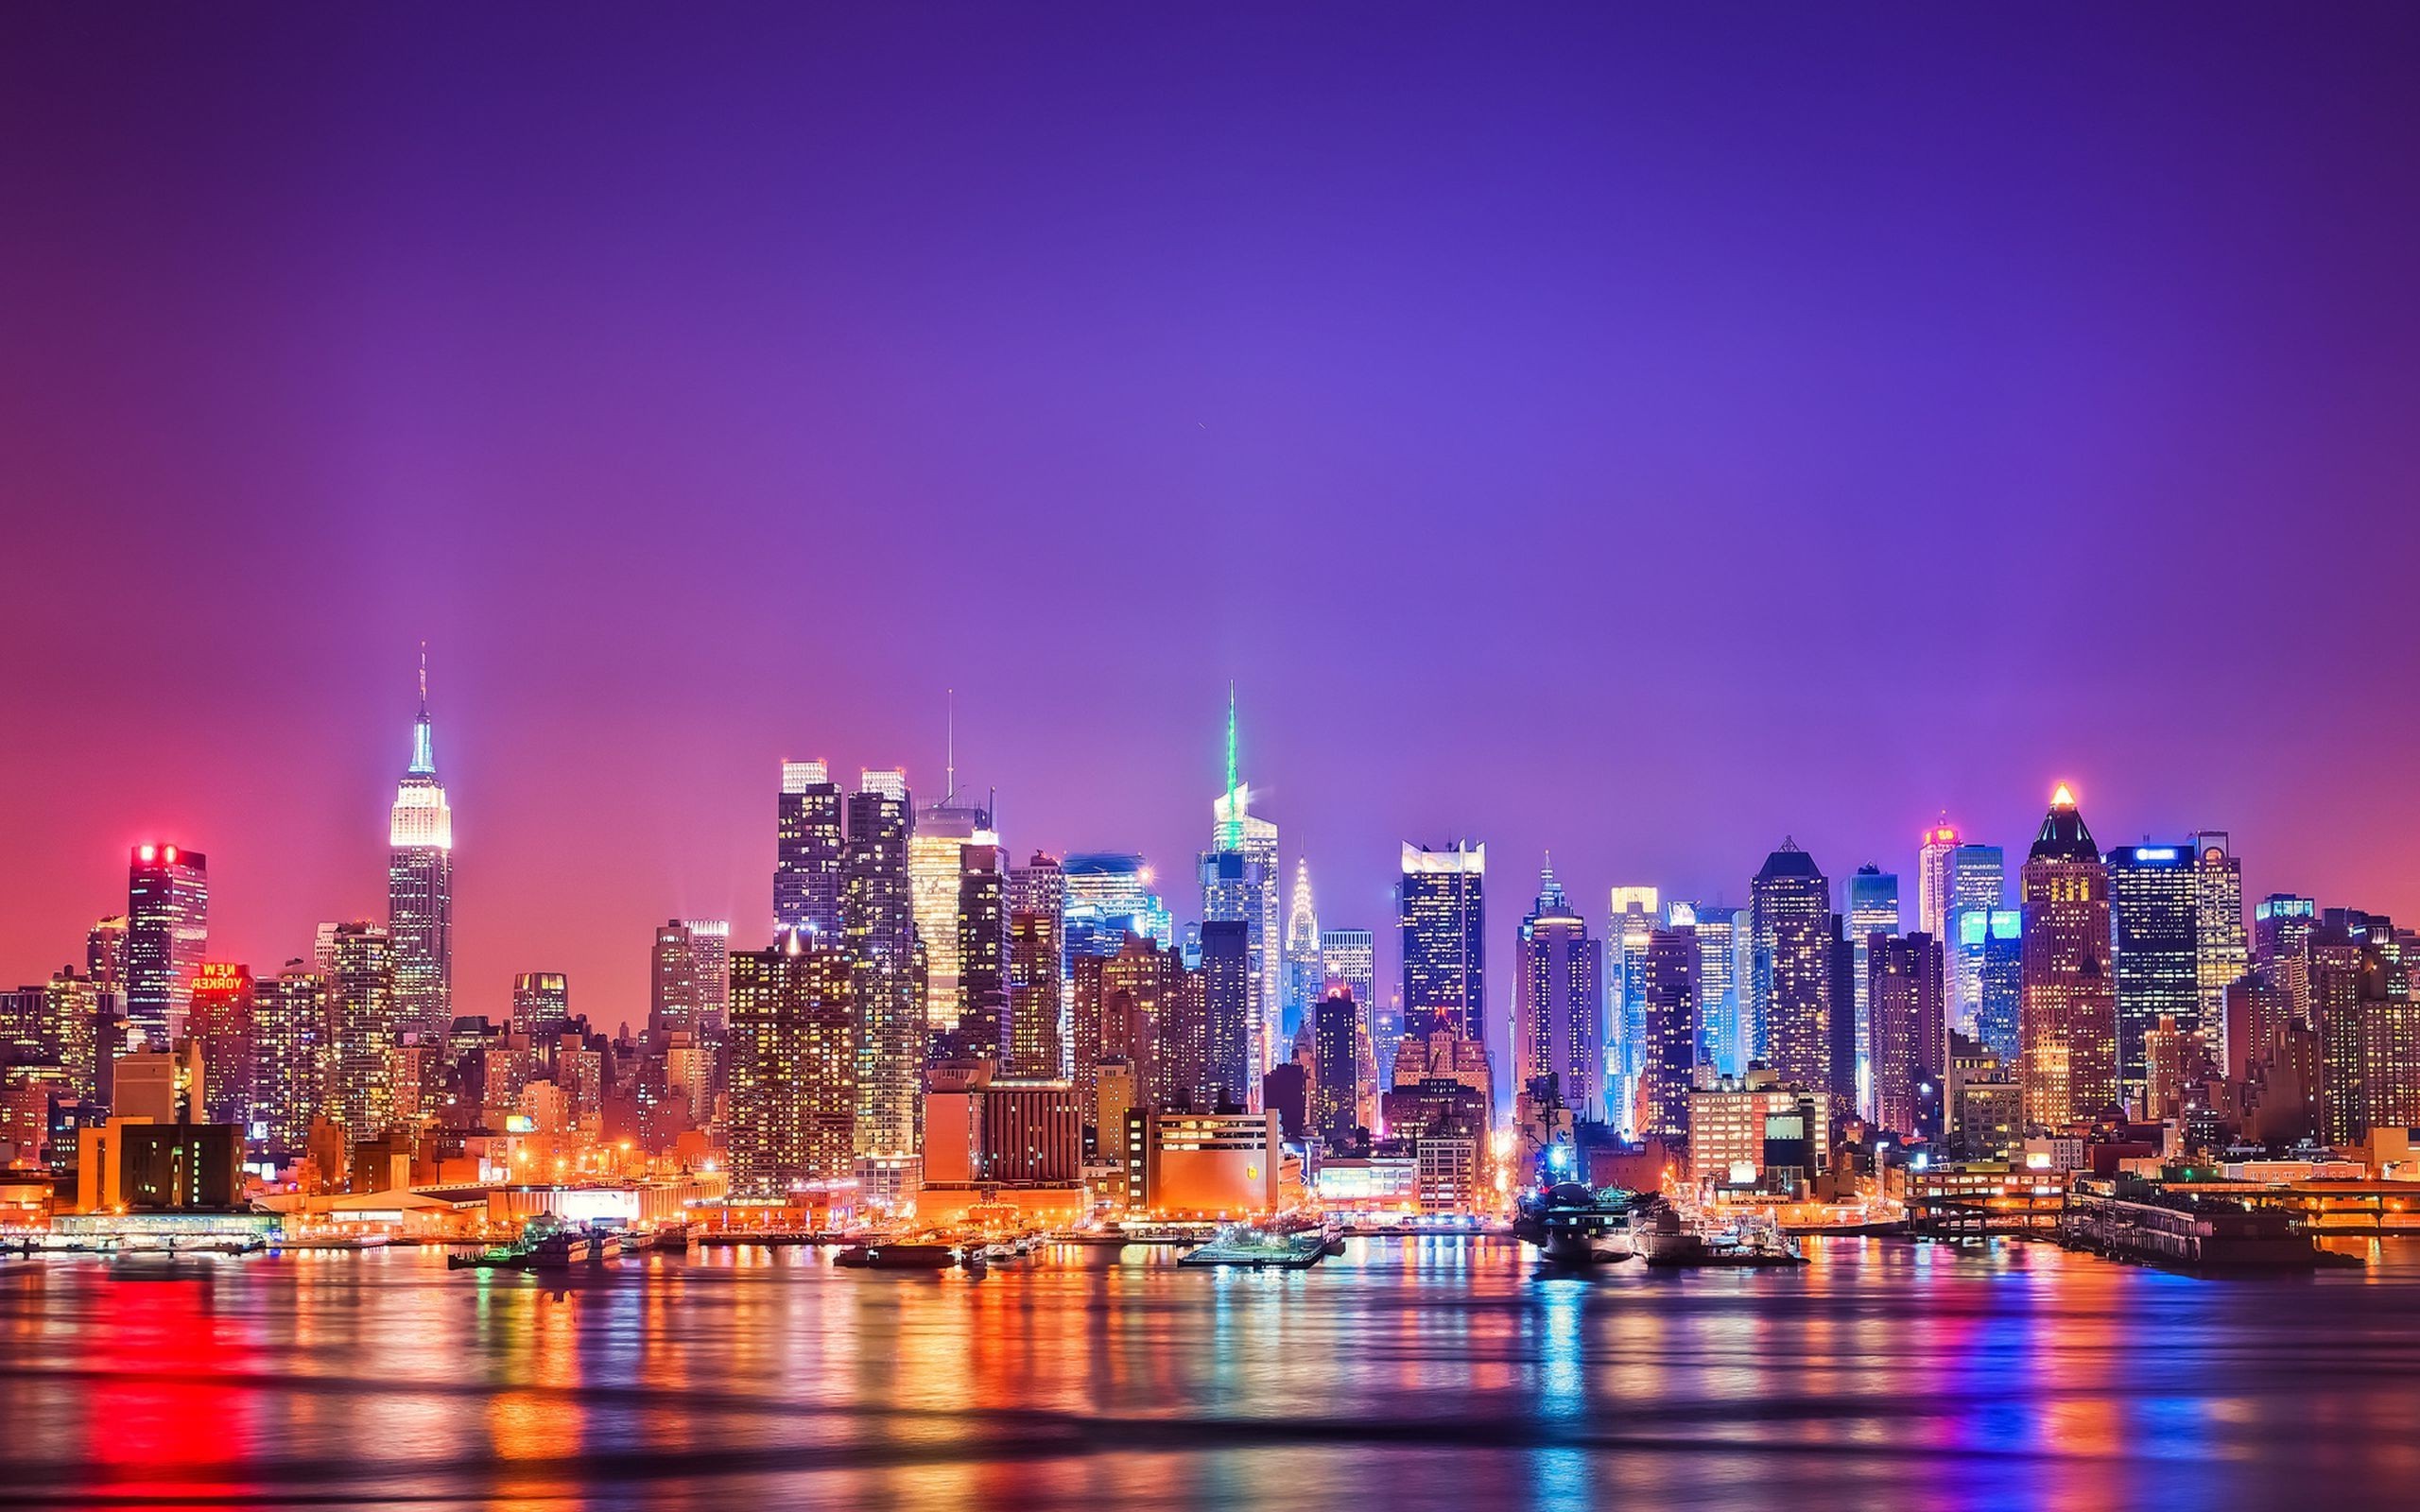 New York City Light at Night Wallpaper in High Resolution at City